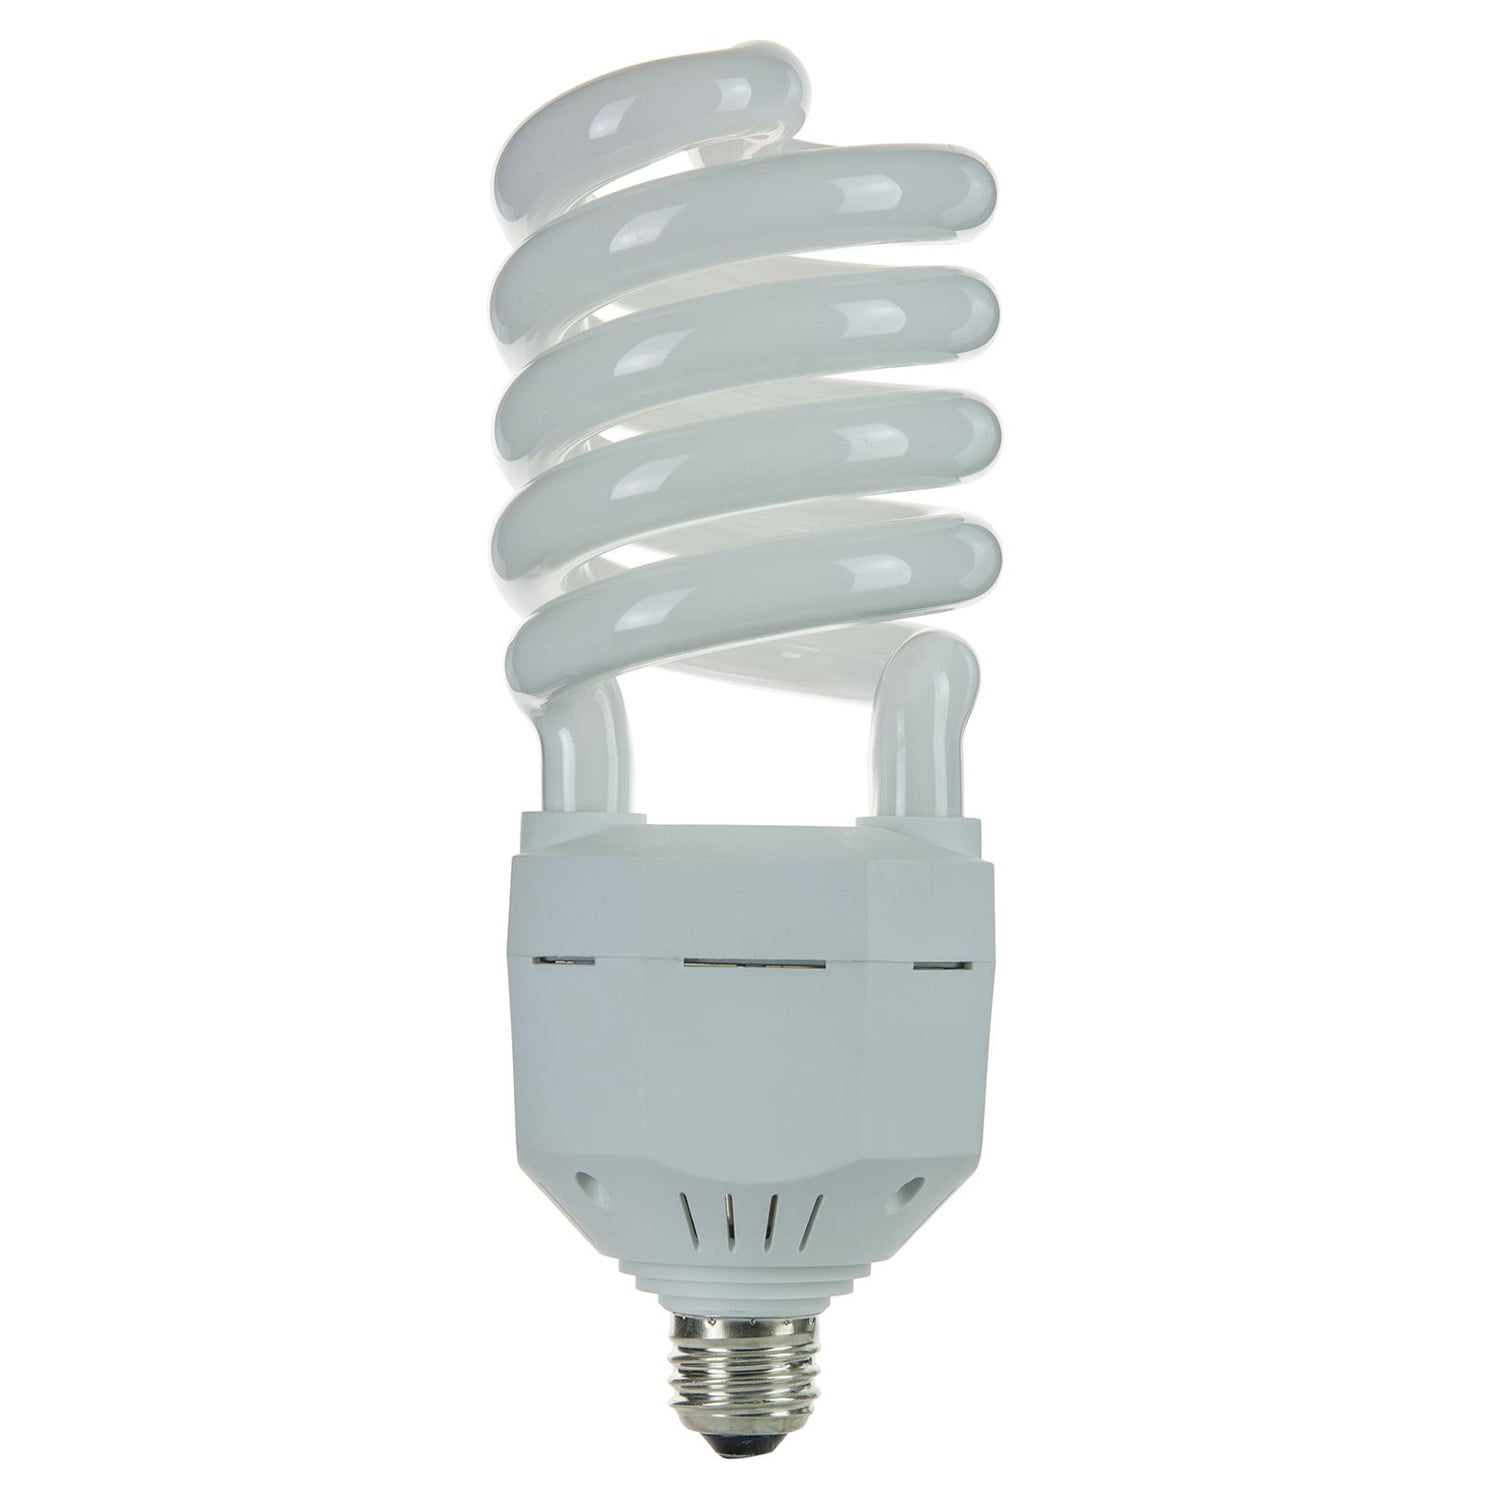 Sunlite 41165-SU Compact Fluorescent T2 Spiral Standard Household Energy Saving CFL Light Bulb 6 Pack Base 65K Daylight Medium 100W Equivilant 26 Watt, E26 6500K-Daylight 